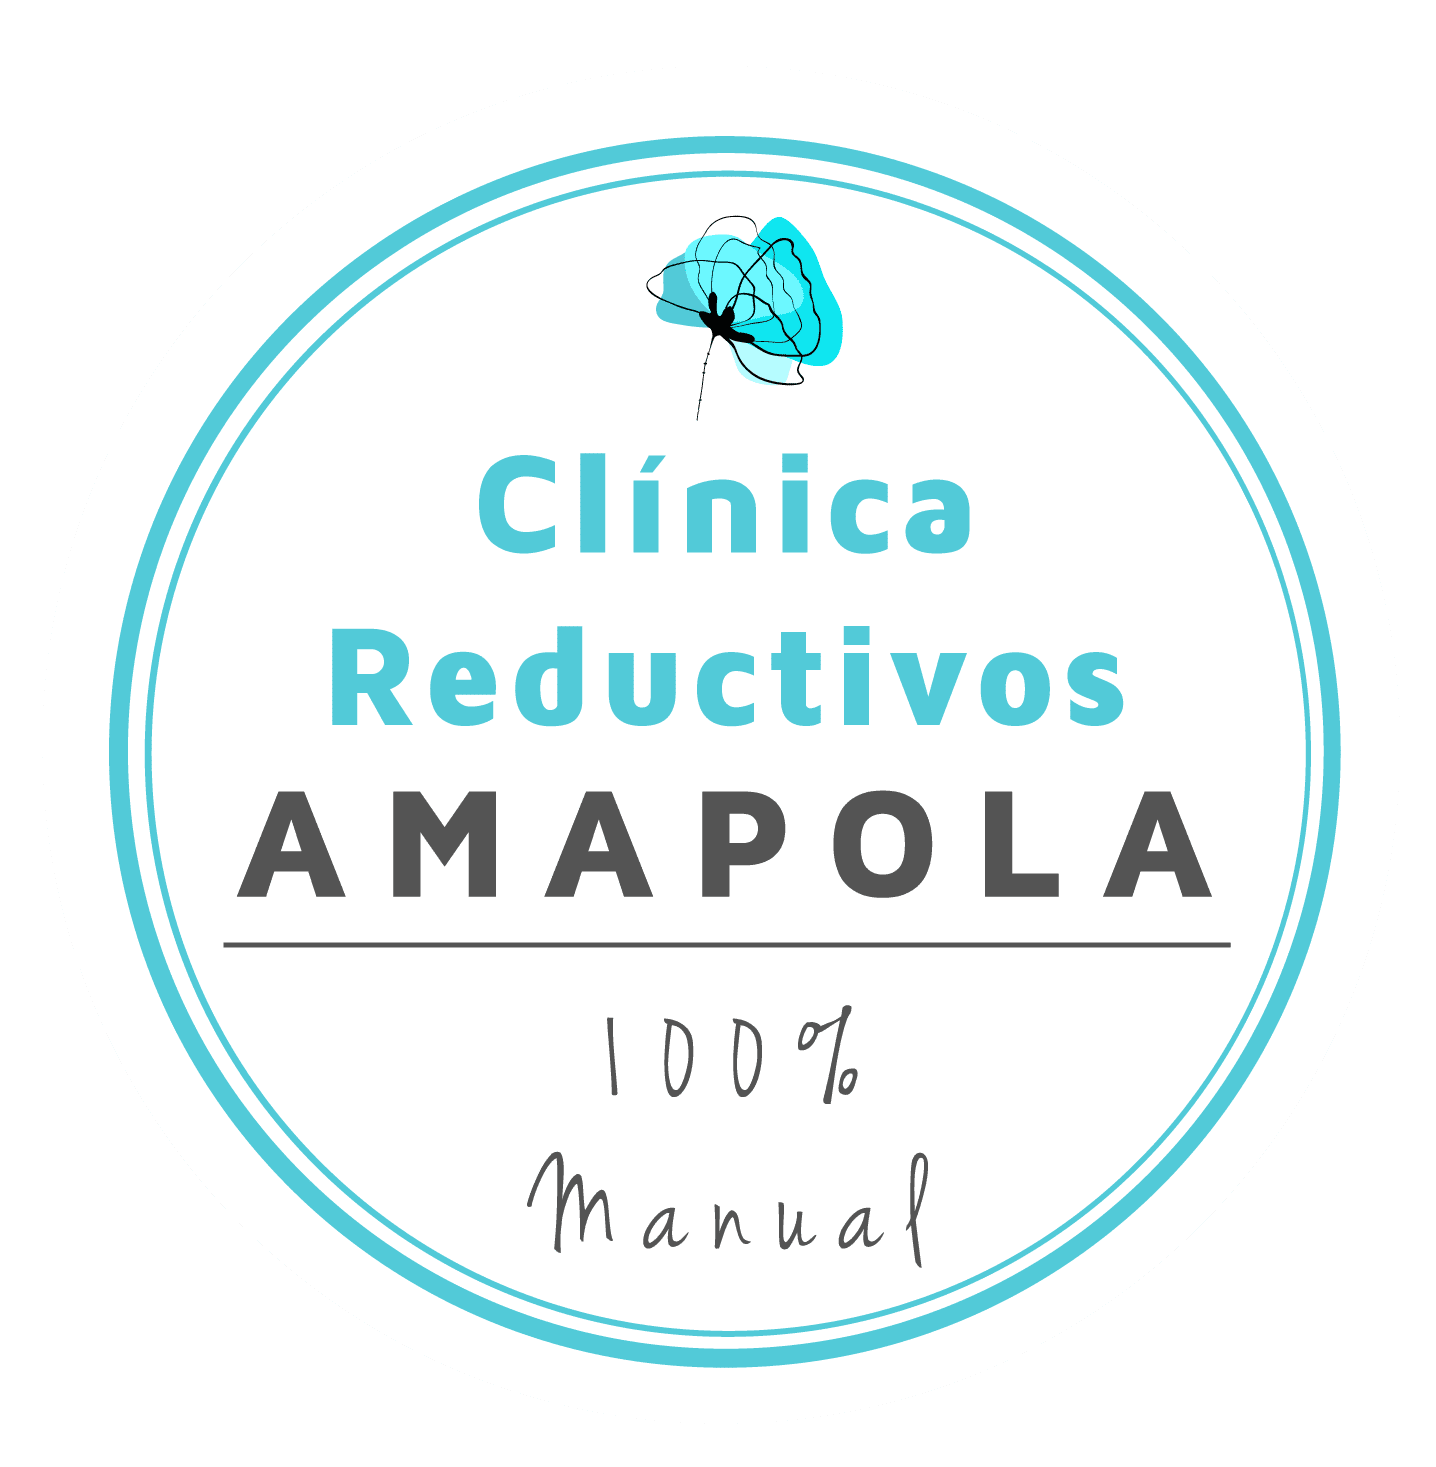 Clinica Reductivos Amapola 100%Manual